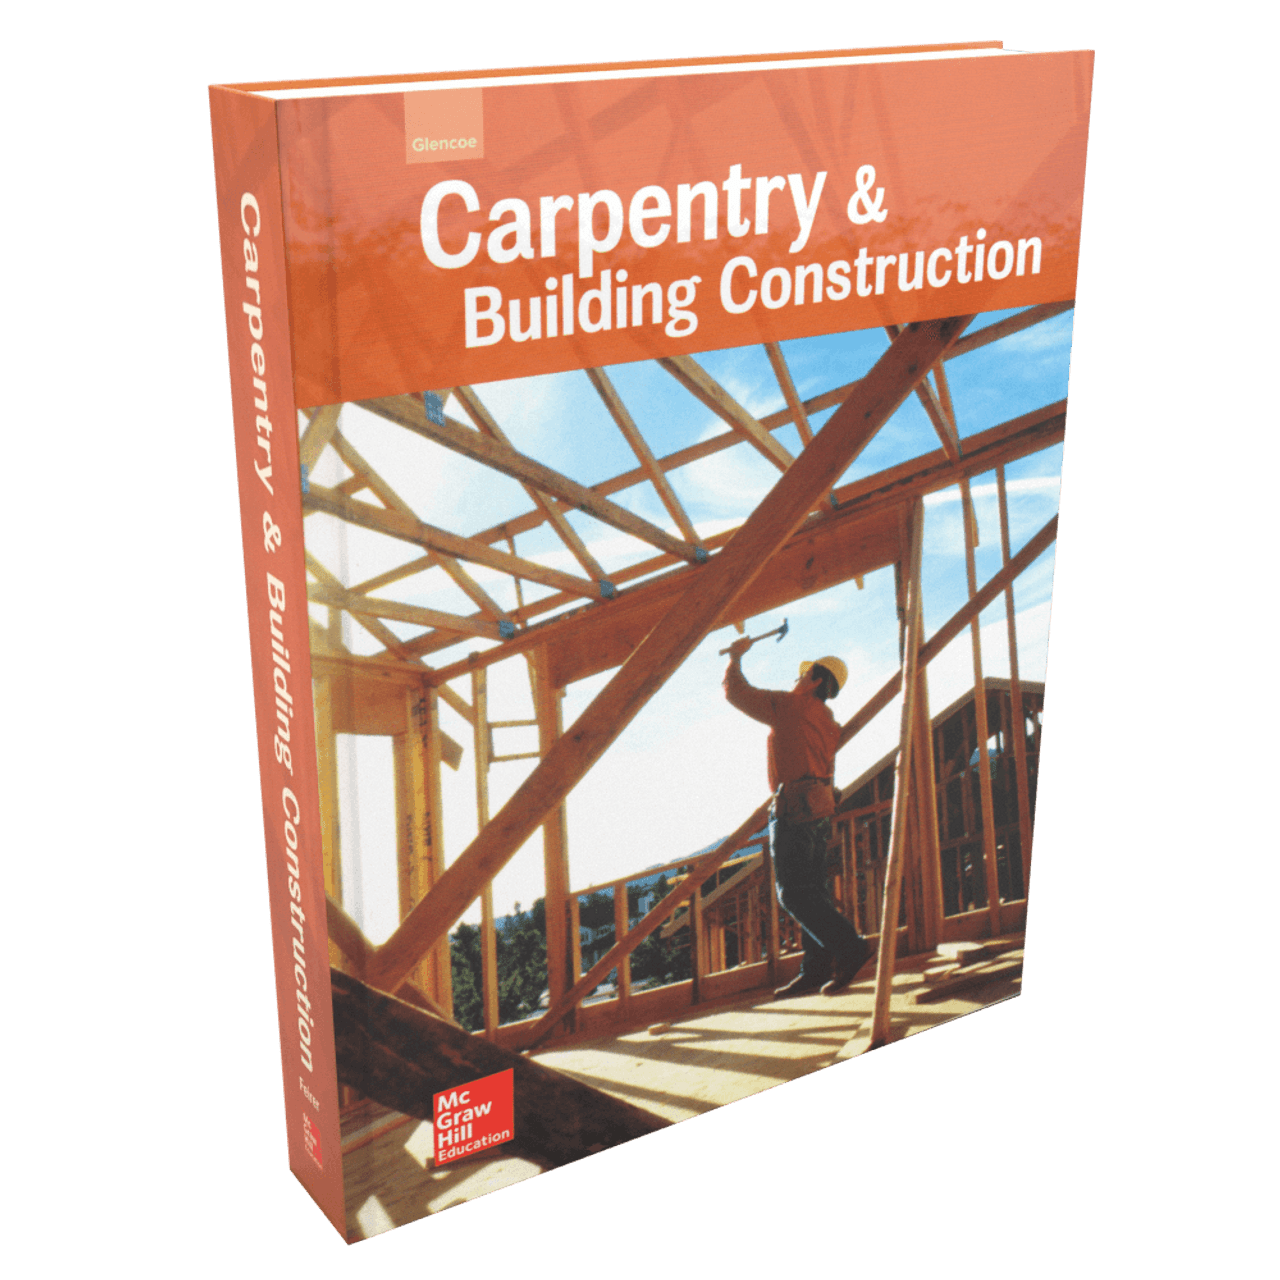 Carpentry & Building Construction book